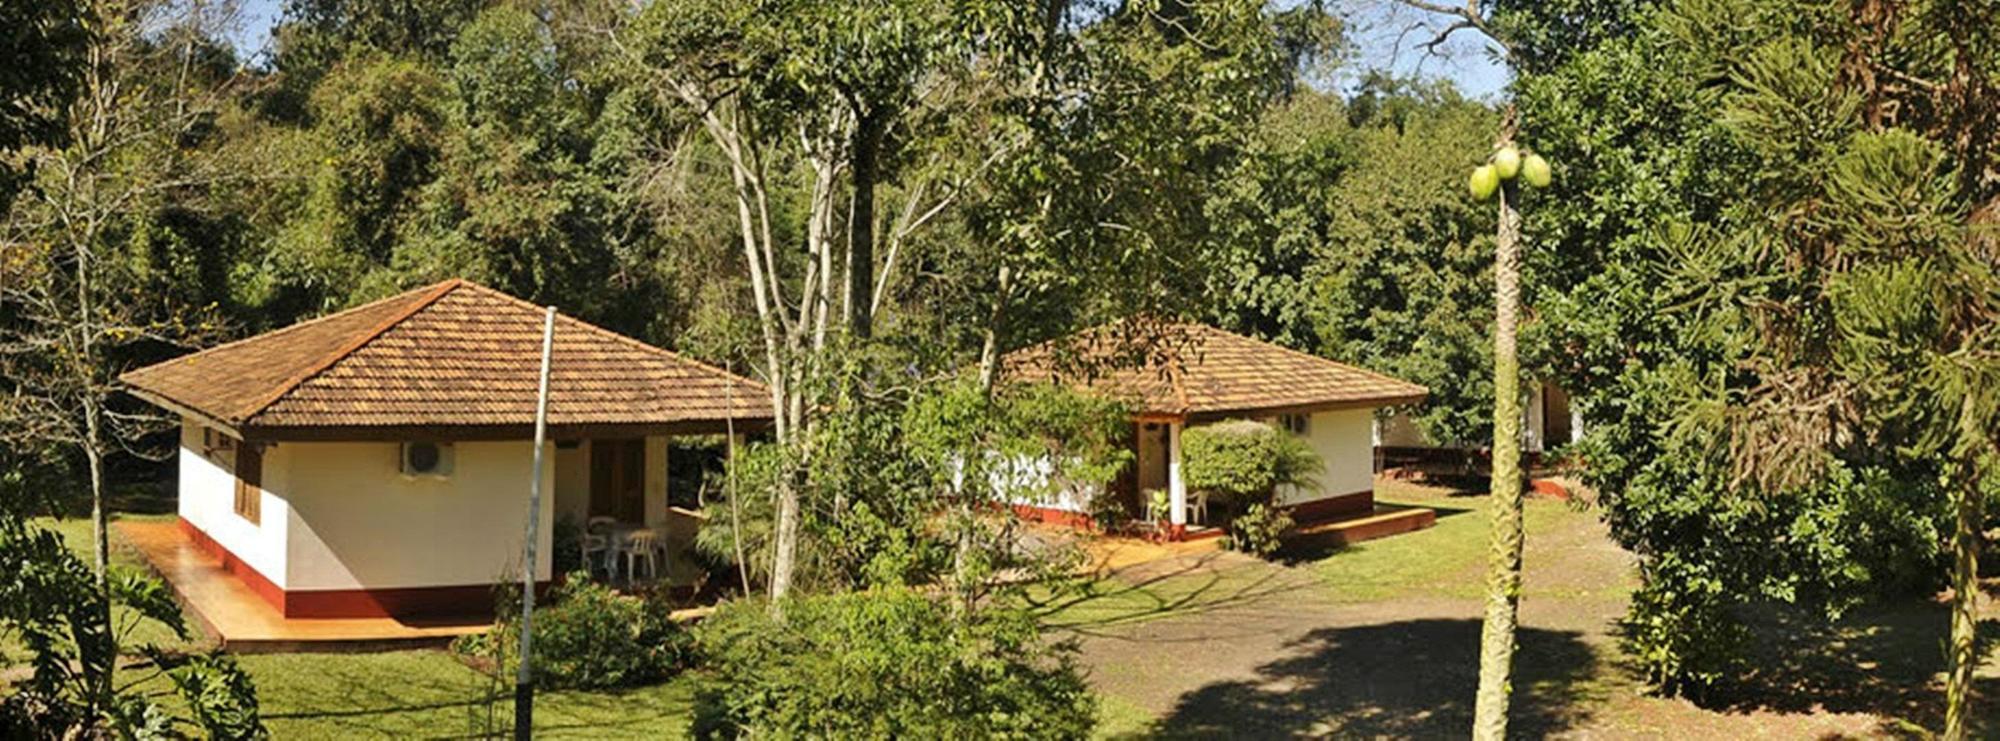 Orquideas Hotel & Cabanas Puerto Iguazú Eksteriør billede